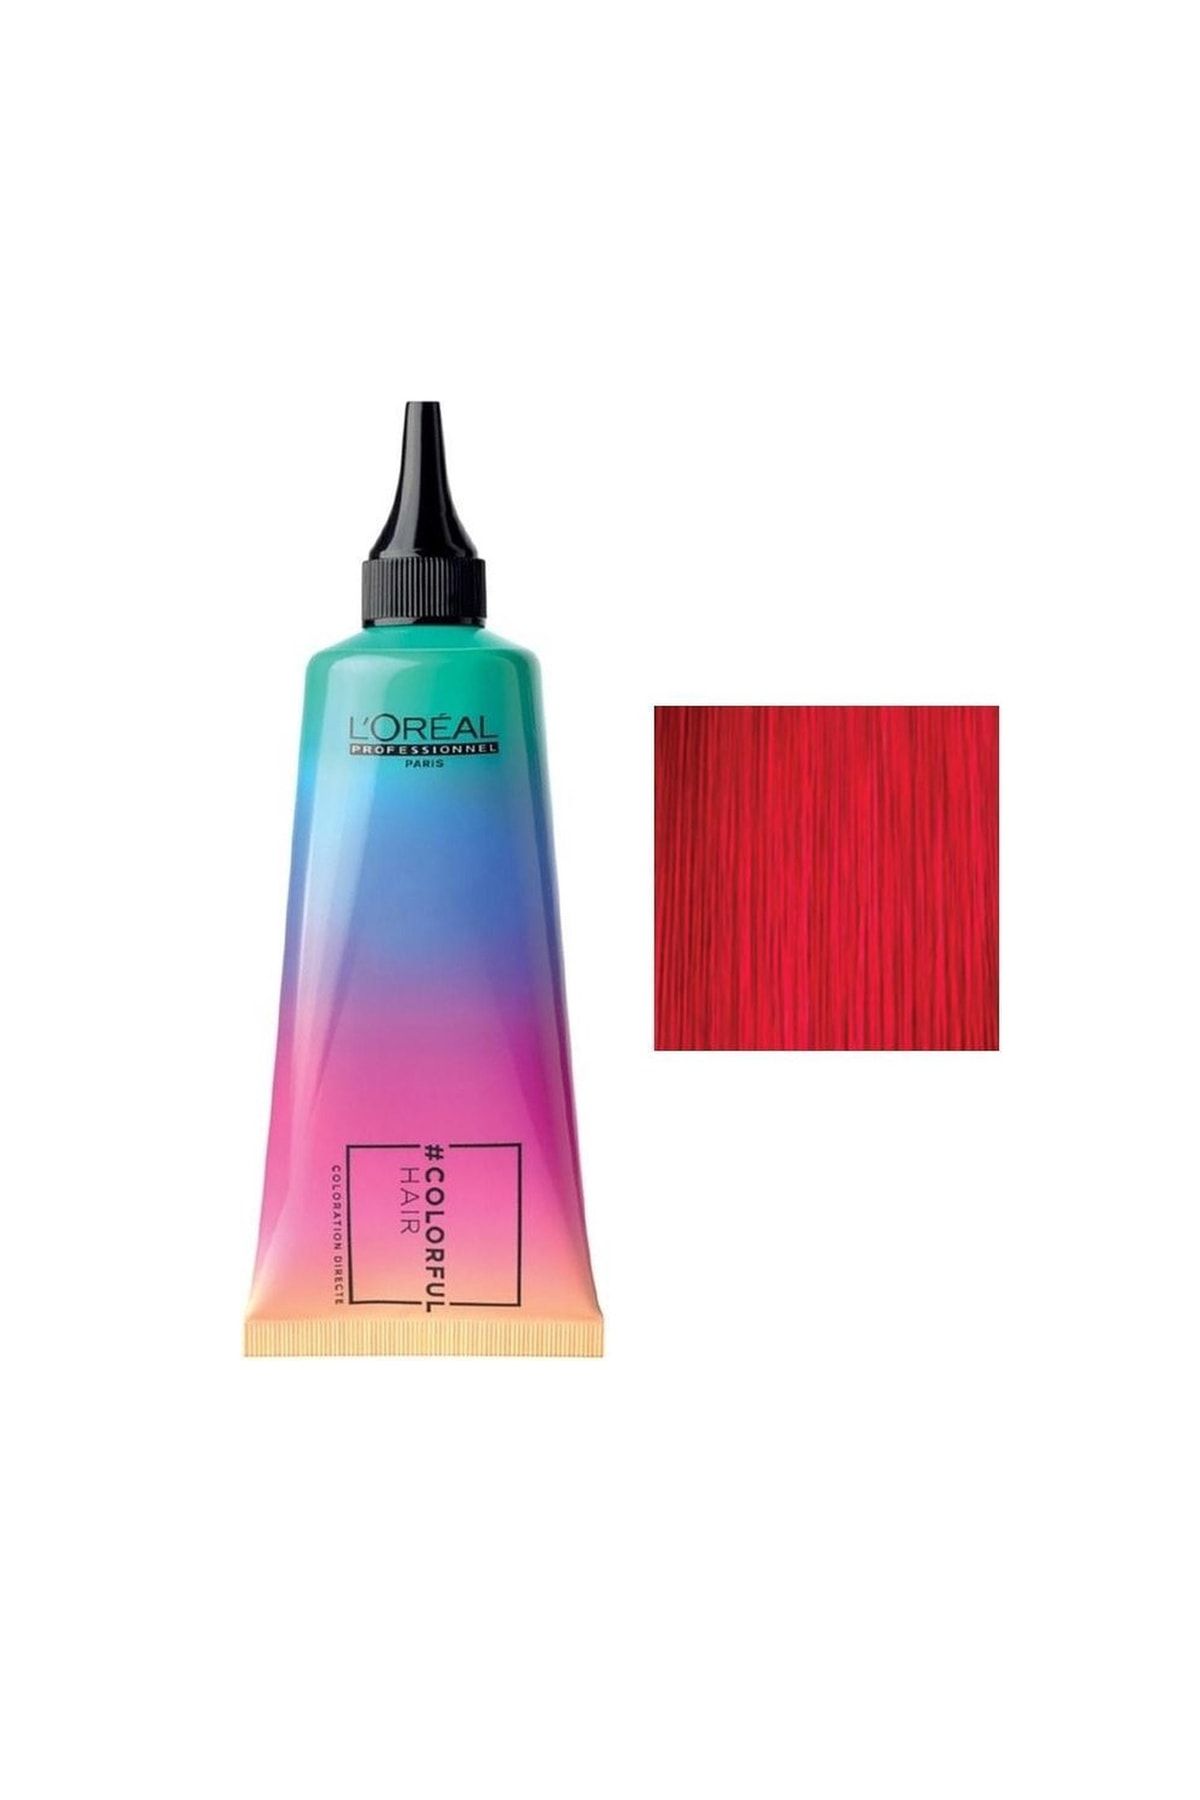 L'oreal Professionnel Colorful Hair Red Lipstick Red Bright Perfect Semi Permament Hair Color Cream 90ml